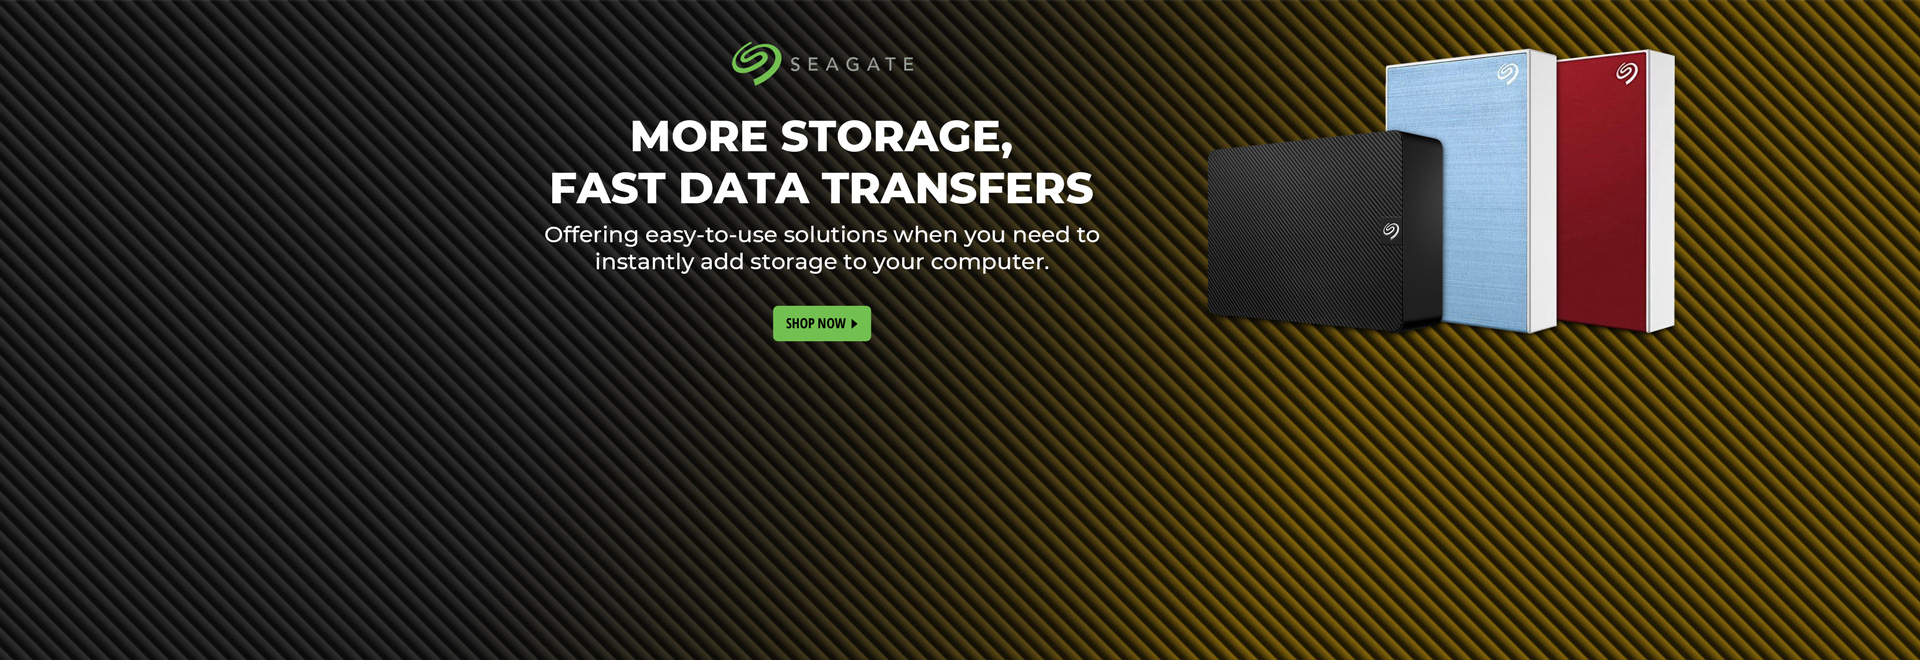 More Storage, Fast Data Transfers